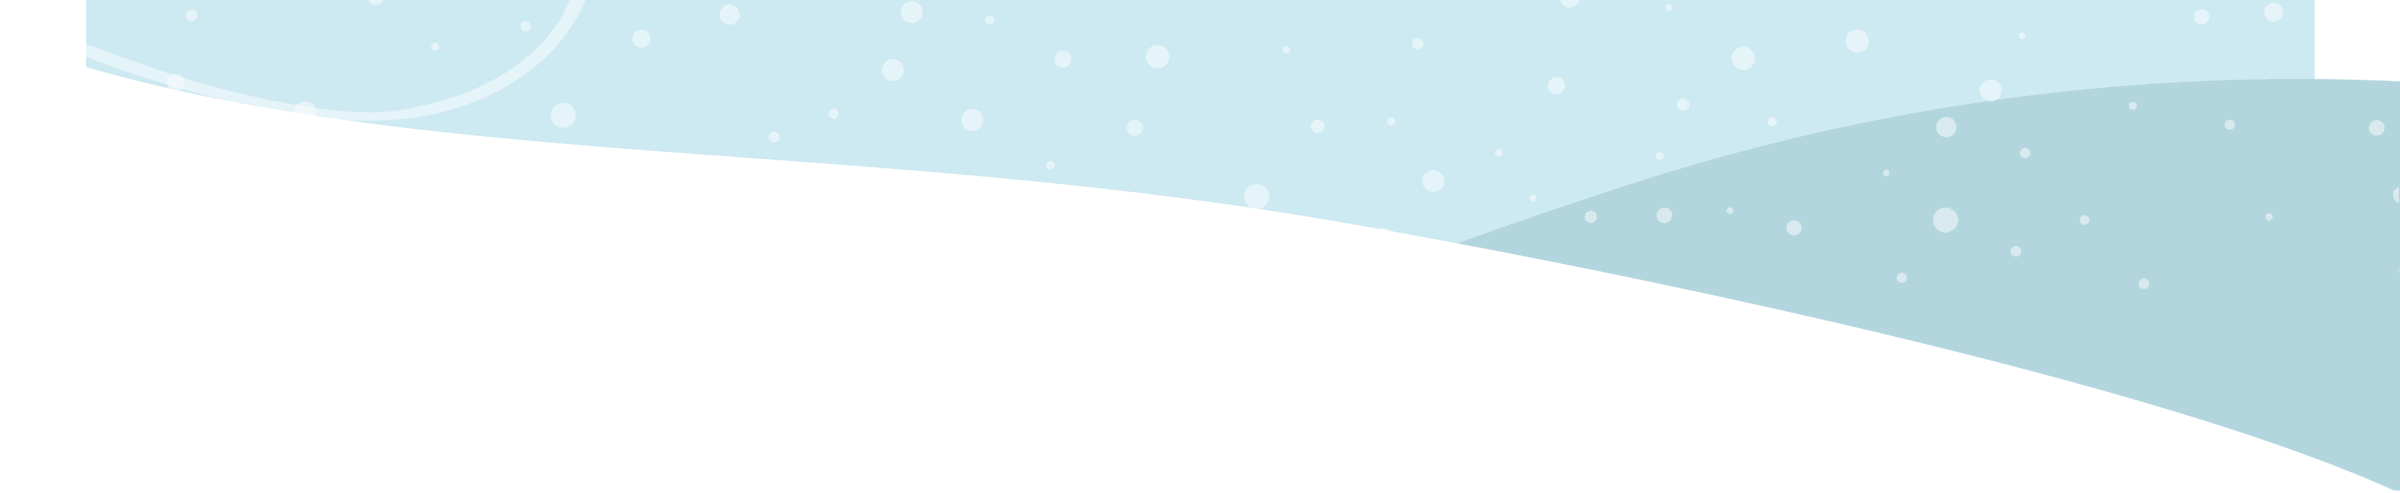 Decorative snowscape